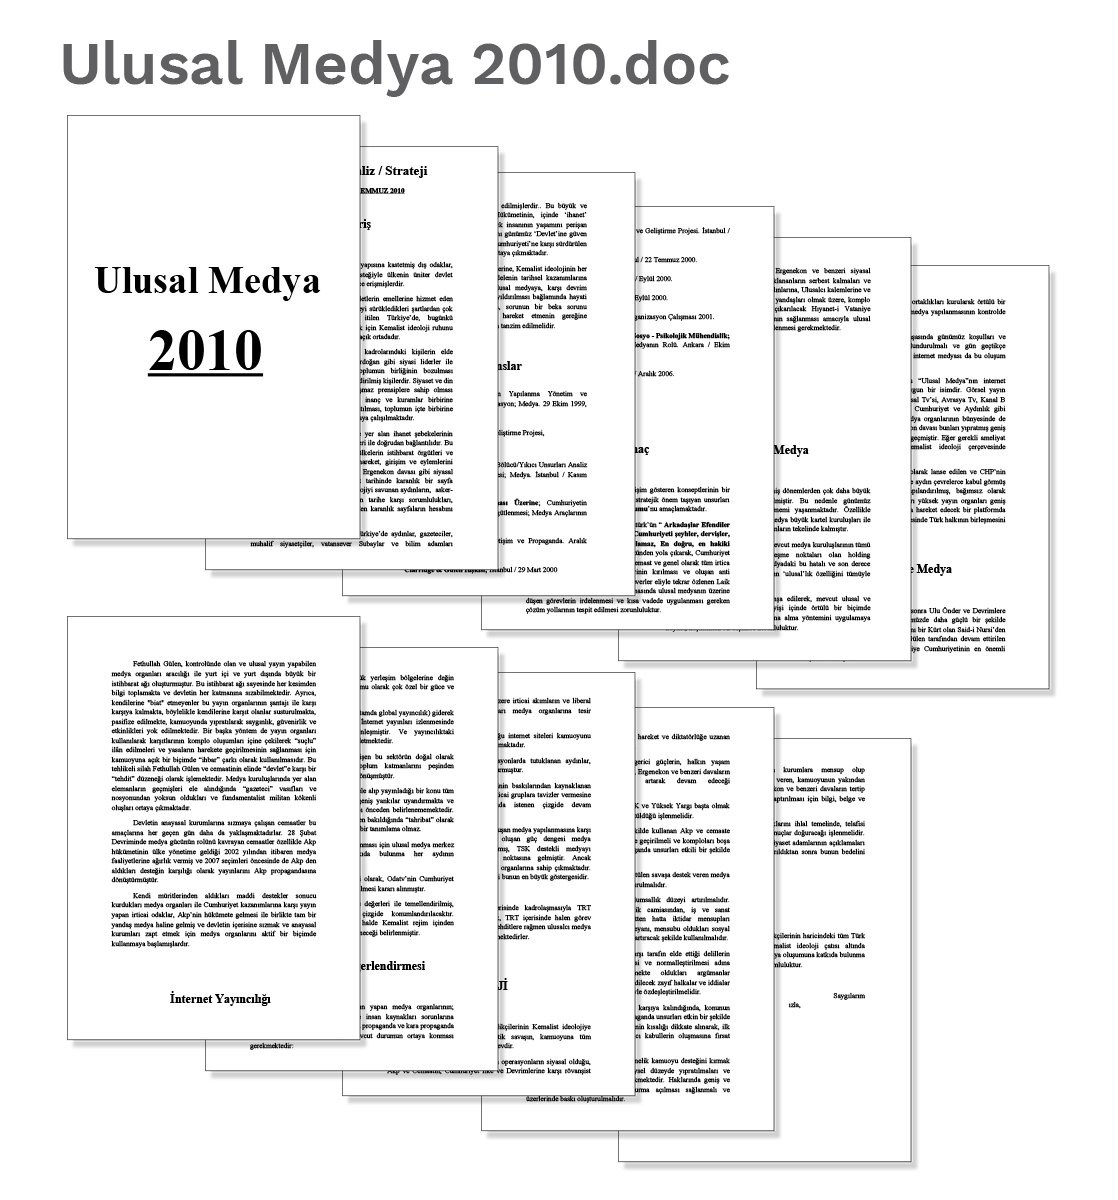 Document 10: Ulusal Medya 2010.doc